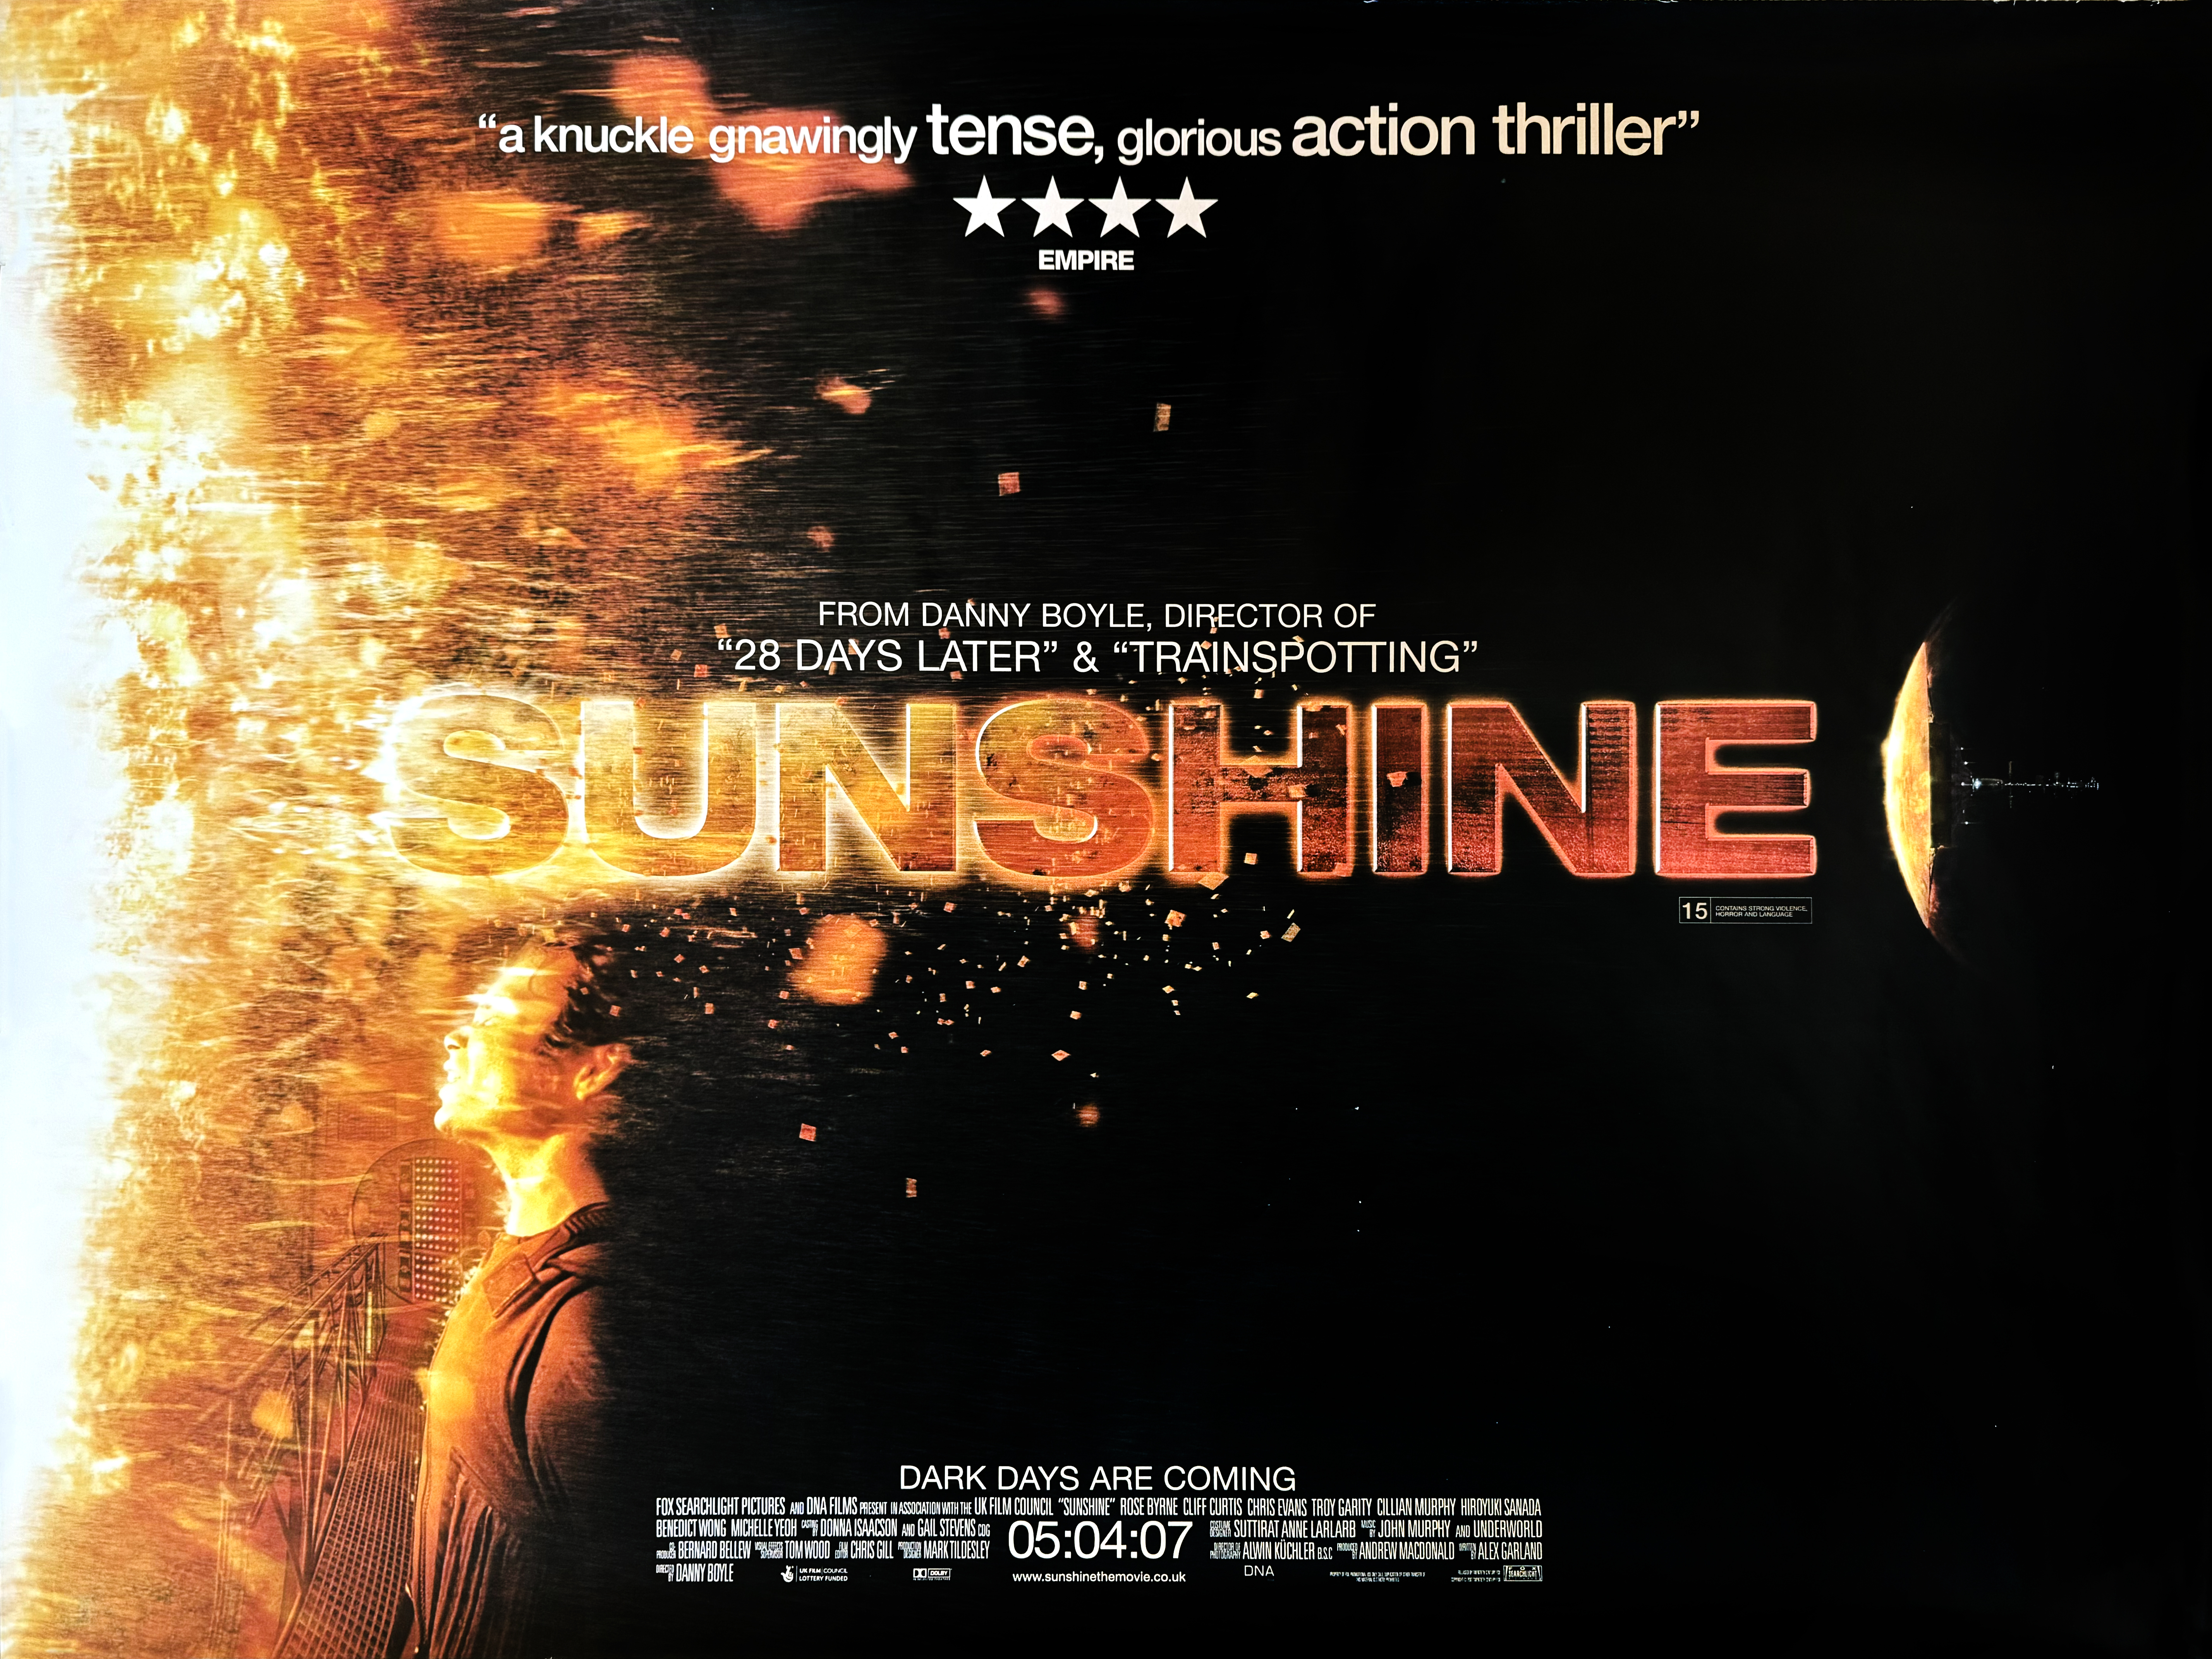 Sunshine movie quad poster